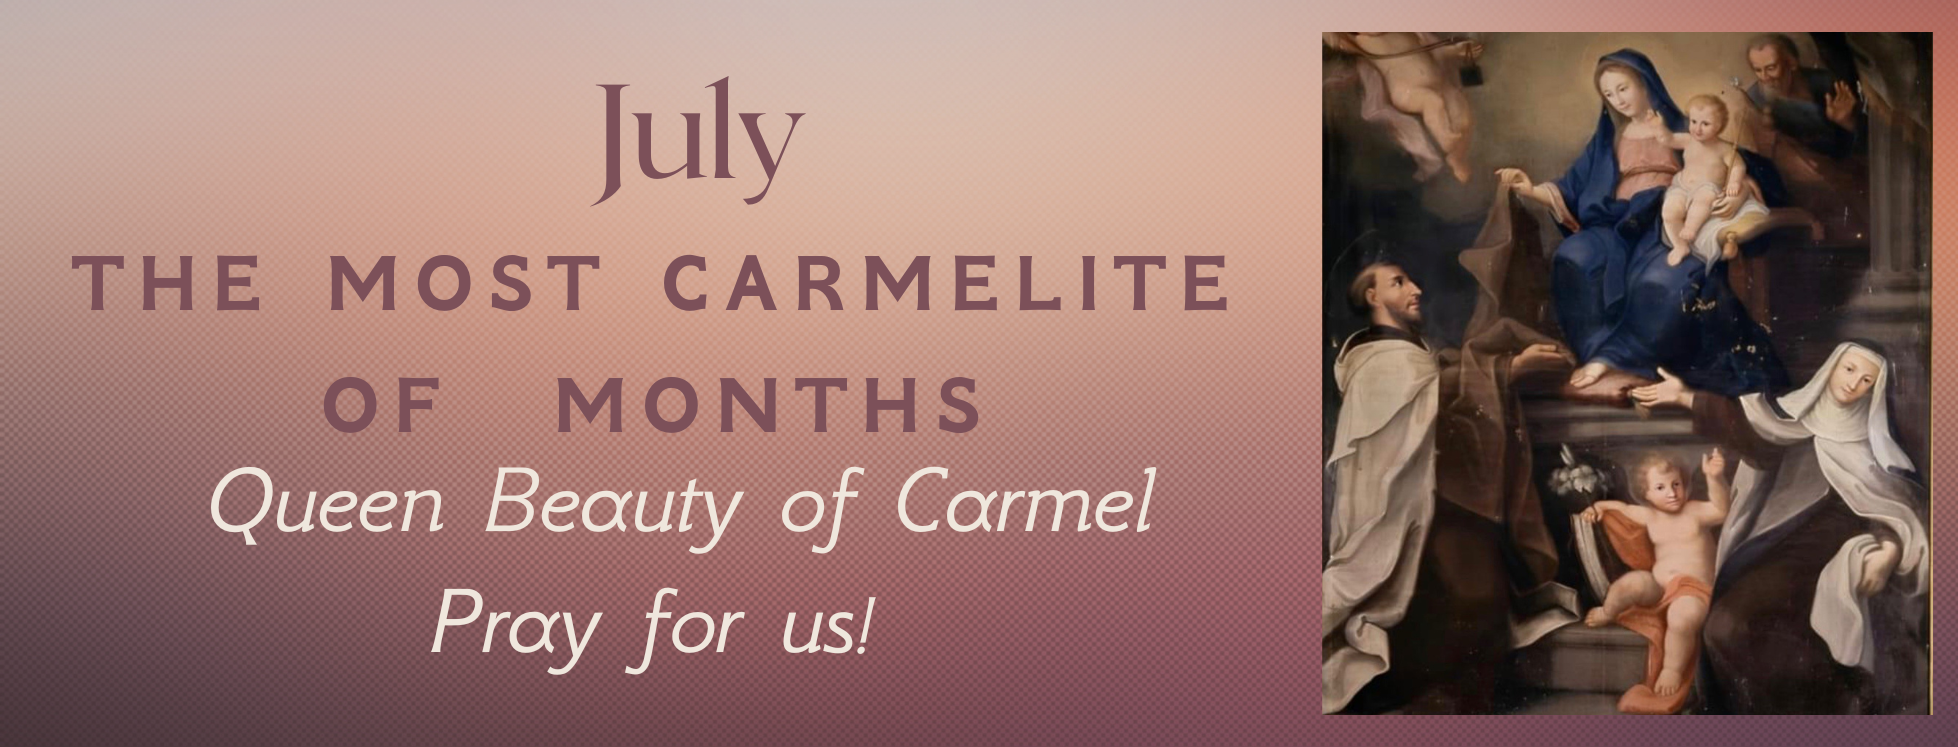 BAN July Carmelite Month